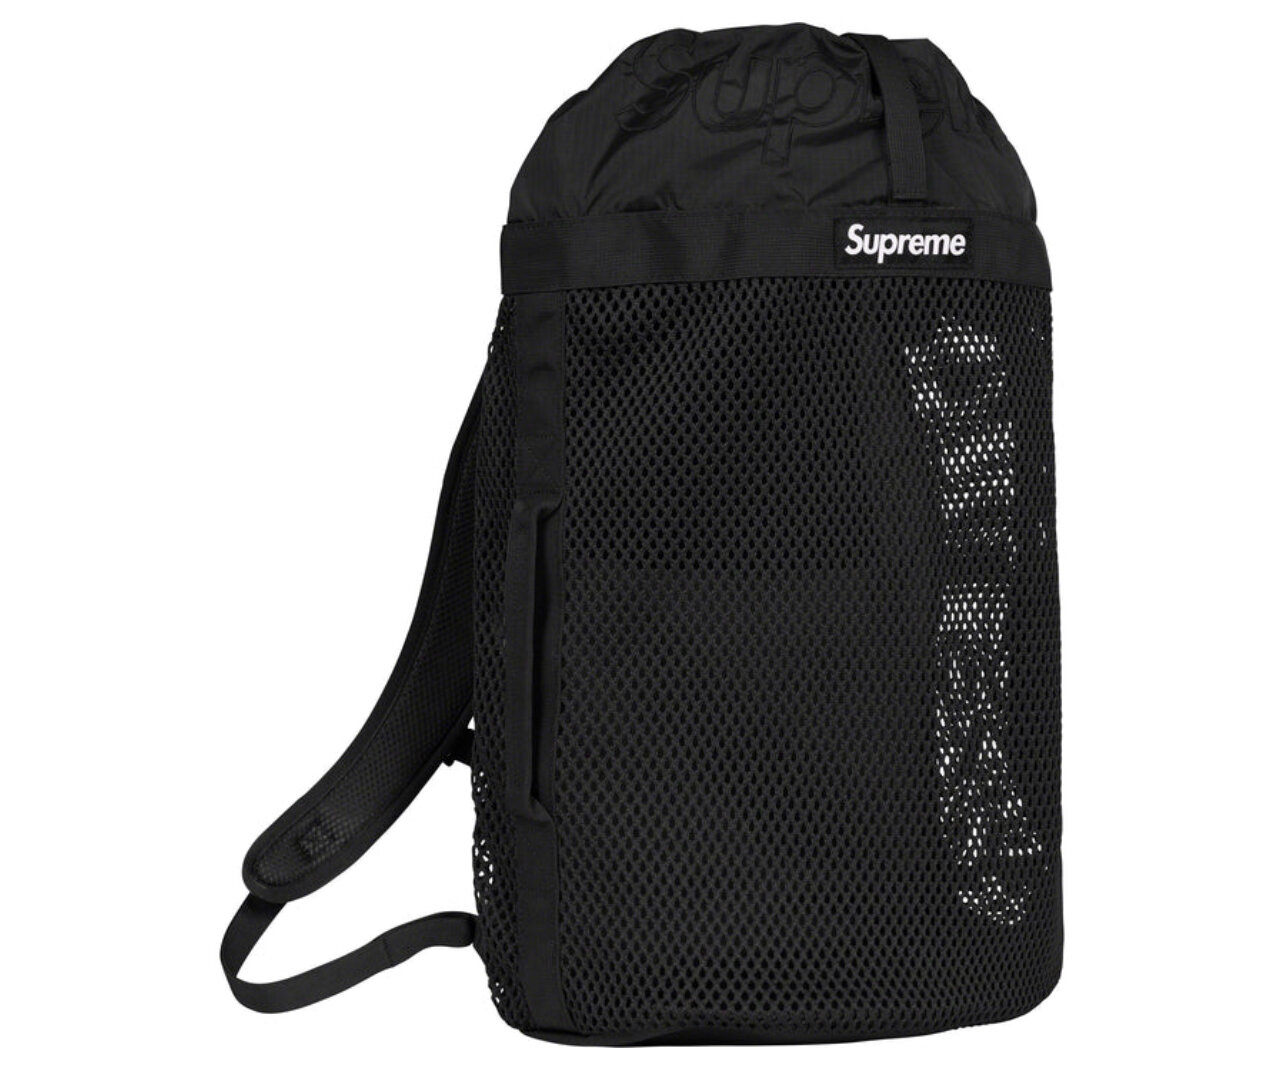 Supreme mesh backpack